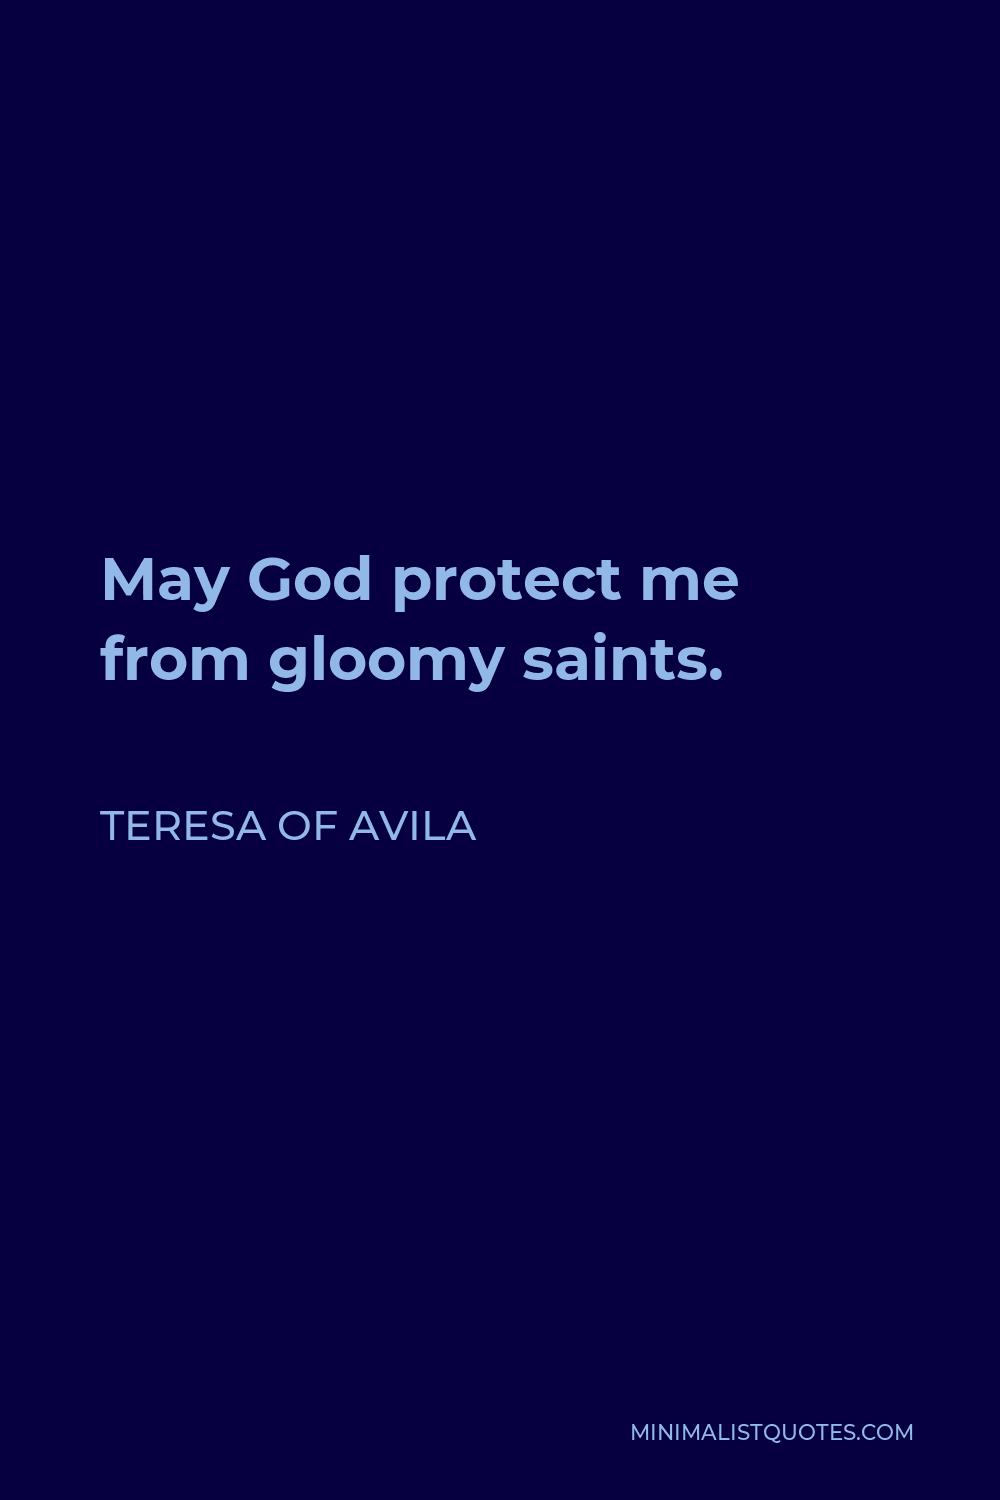 Teresa of Avila Quote - May God protect me from gloomy saints.